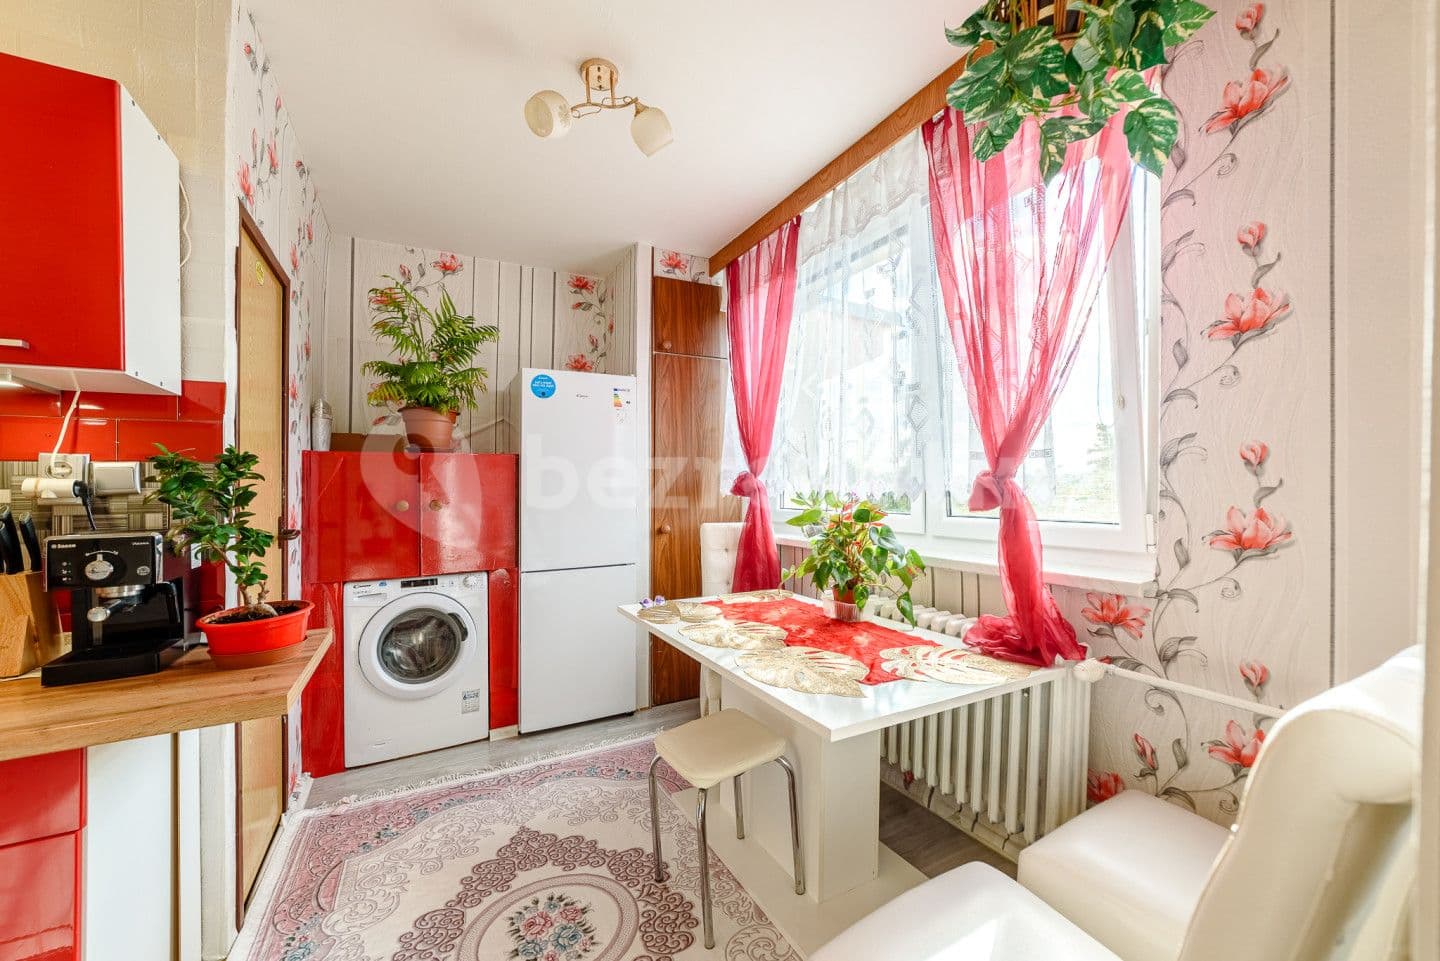 3 bedroom flat for sale, 74 m², Na Kopci, Jihlava, Vysočina Region